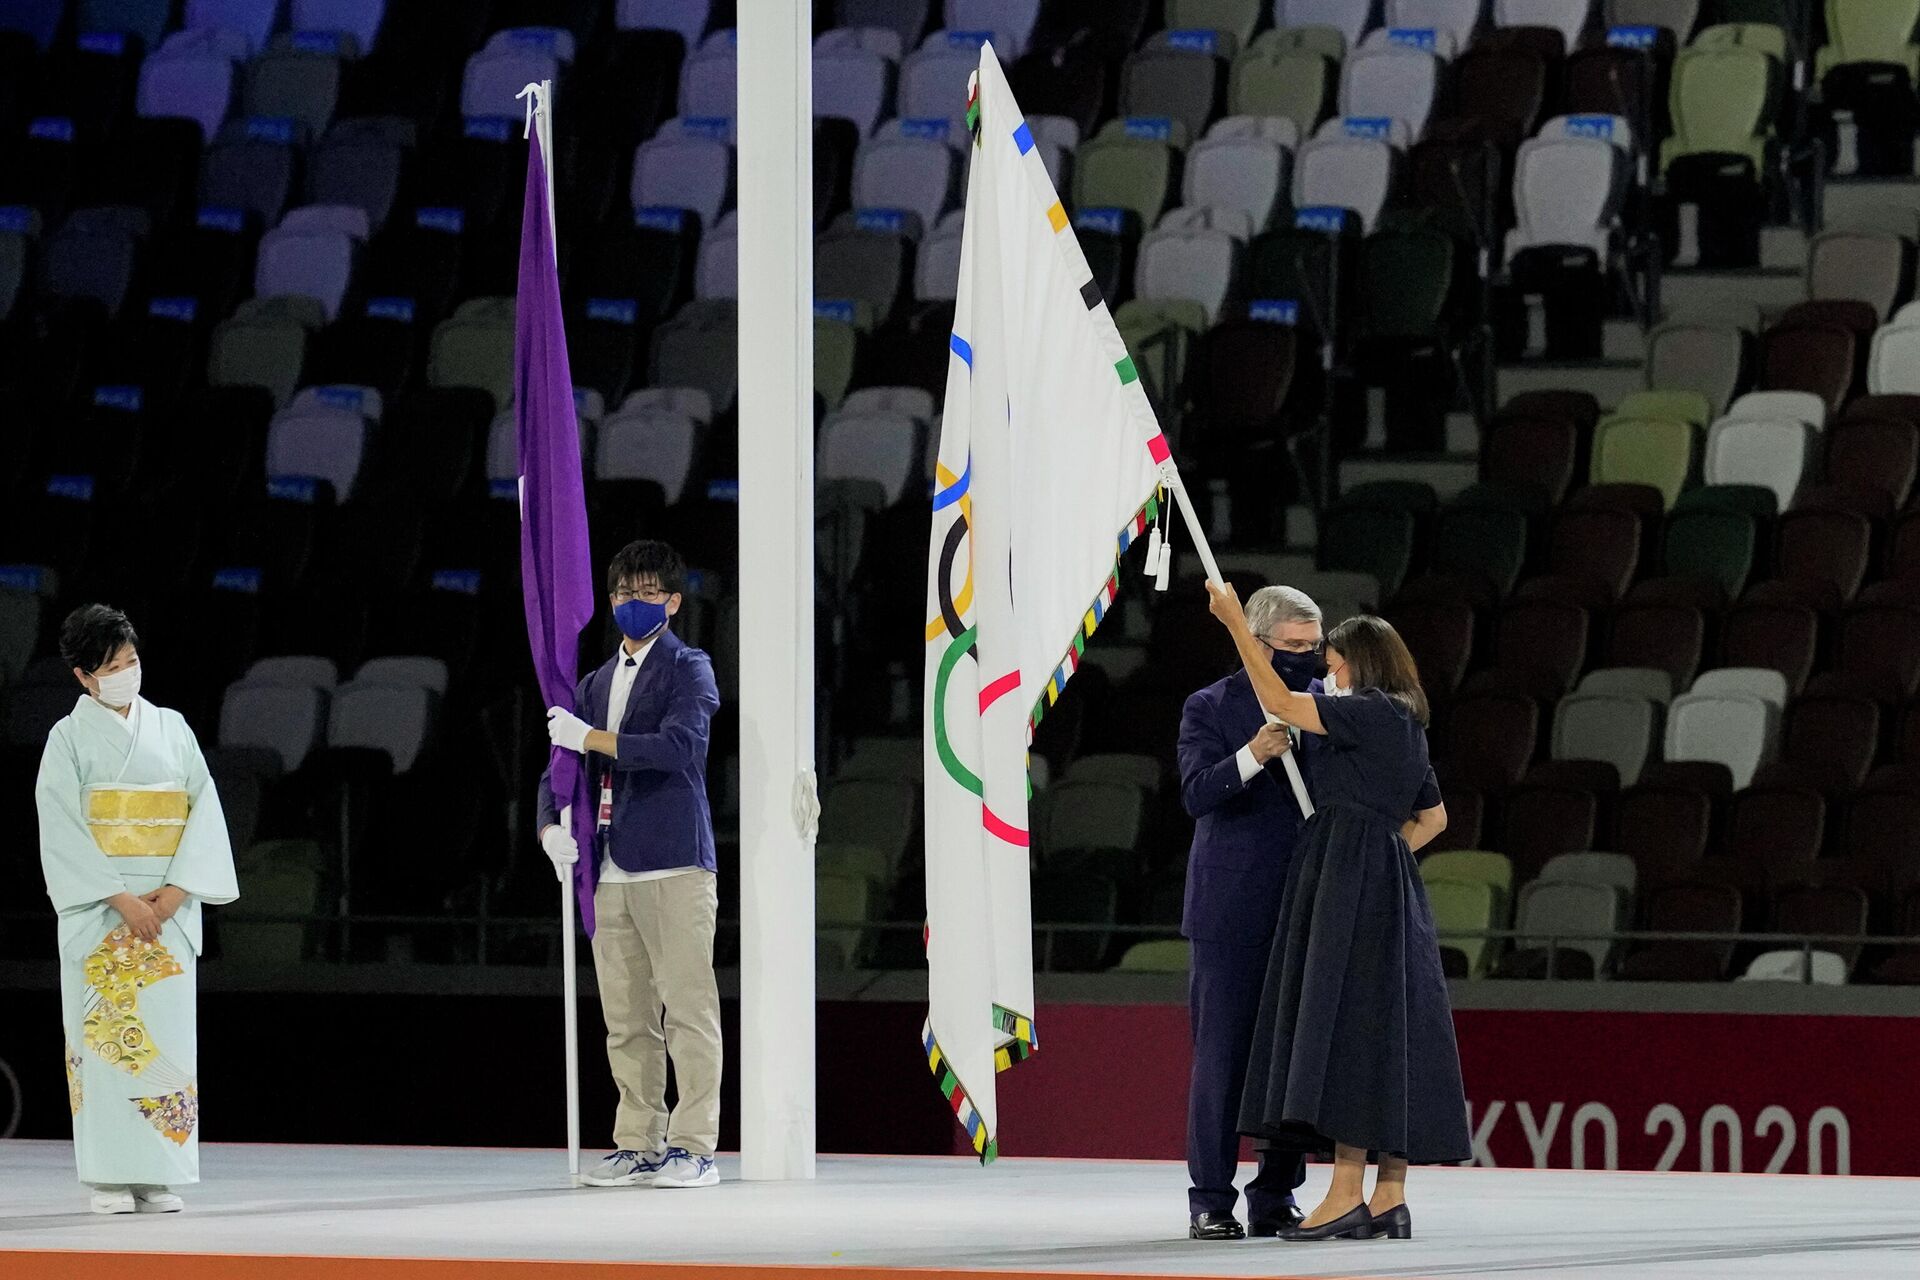 Президент Международного олимпийского комитета Томас Бах (второй справа) передает олимпийский флаг мэру Парижа Анн Идальго (справа) во время церемонии закрытия летних Олимпийских игр 2020 года в Токио, Япония - Sputnik Беларусь, 1920, 08.08.2021